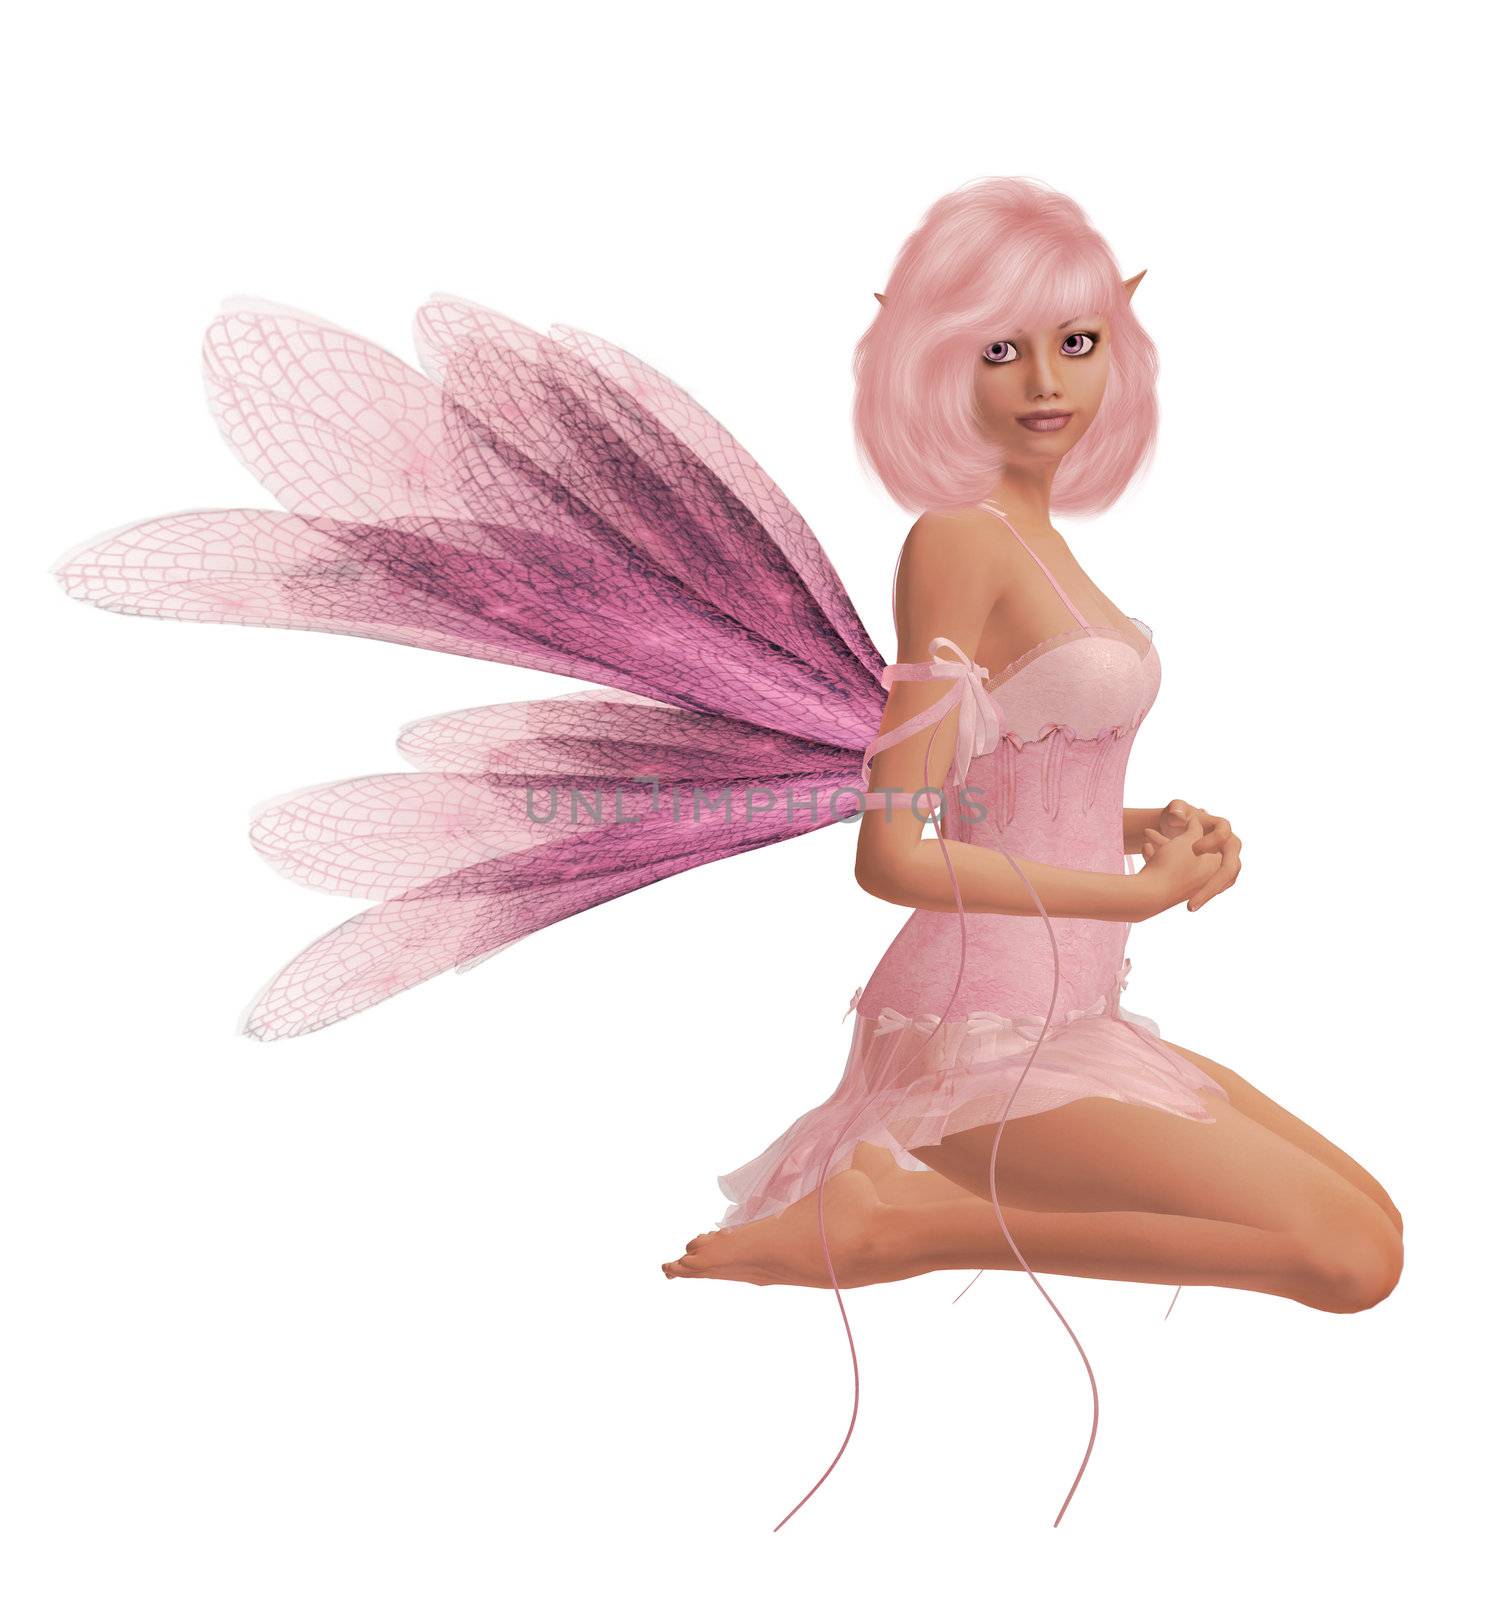 Pink fairy sitting down 300 dpi